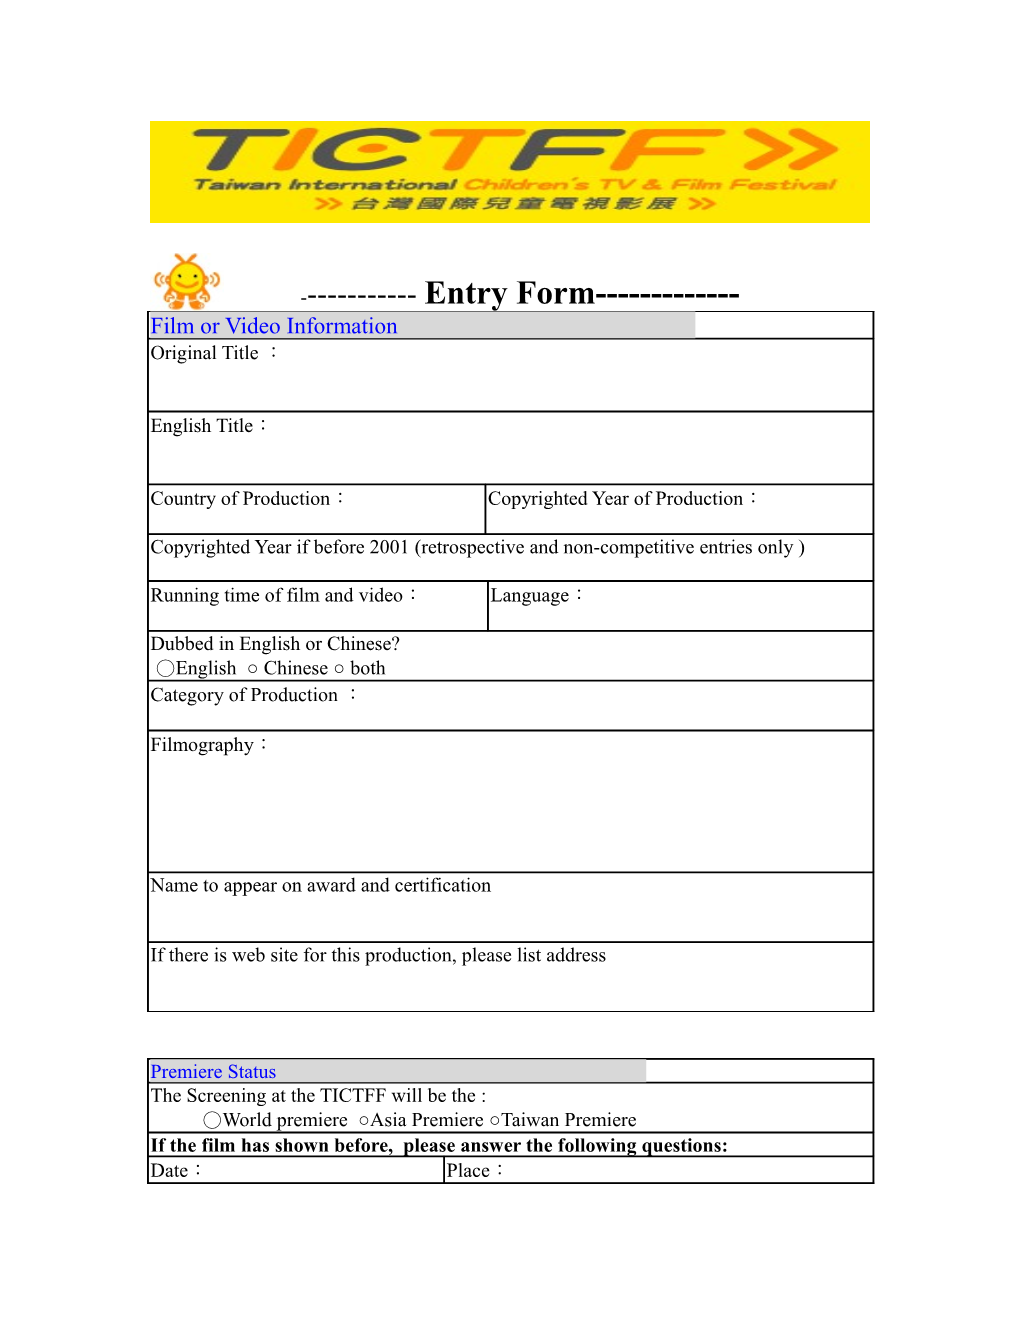 Entry Form-Tictff 2004